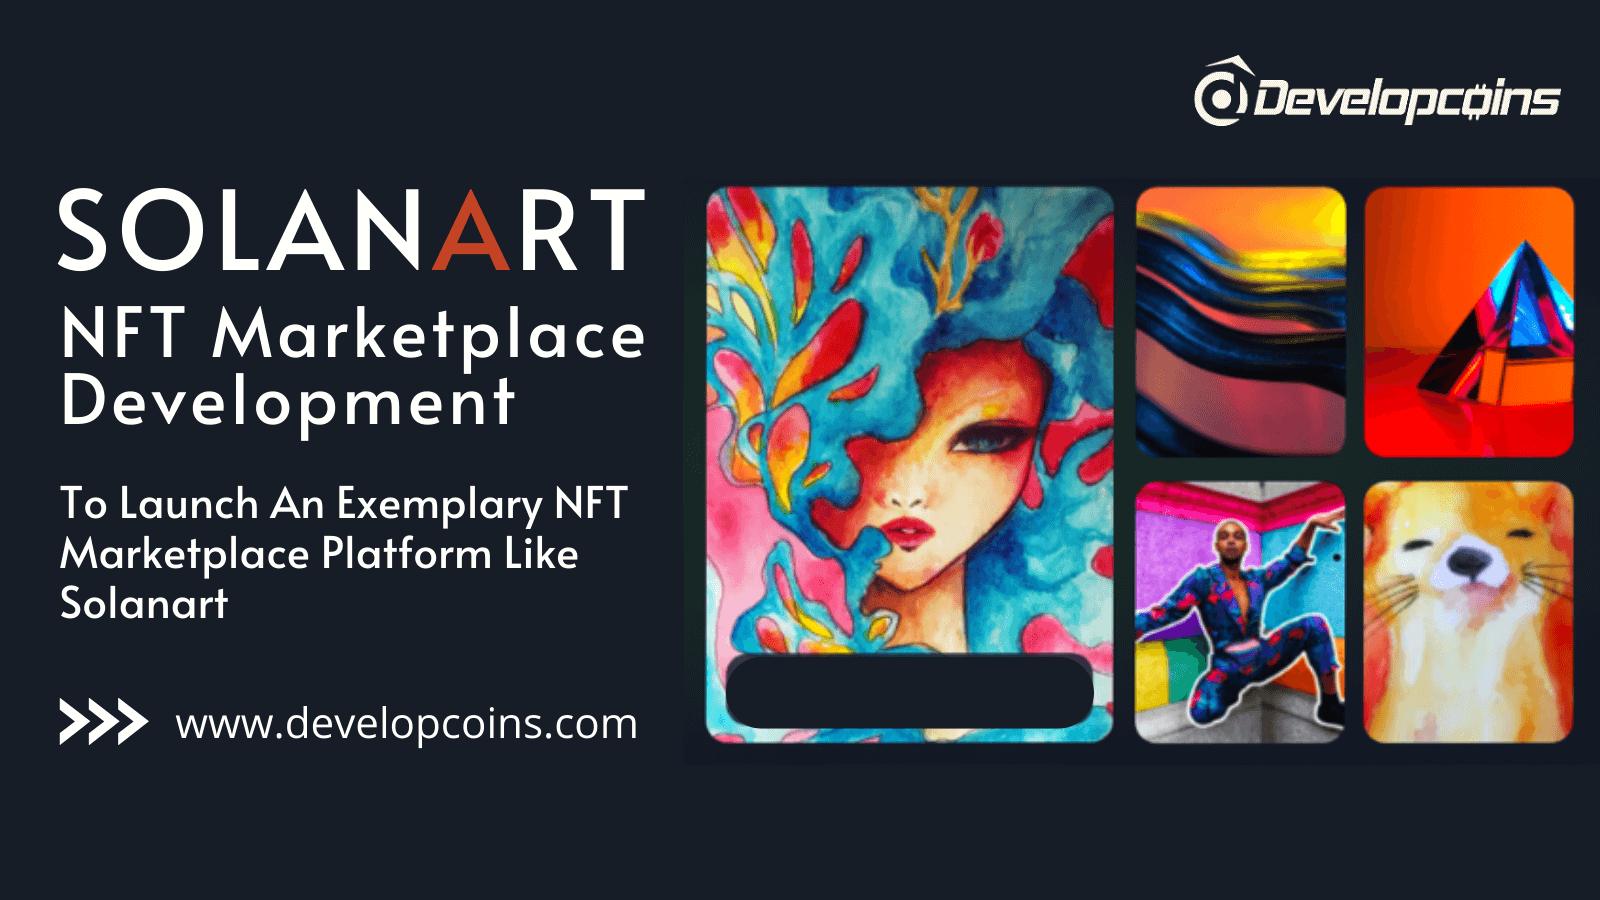 Solanart NFT Marketplace Development To Launch An Exemplary Marketplace Platform Like Solanart